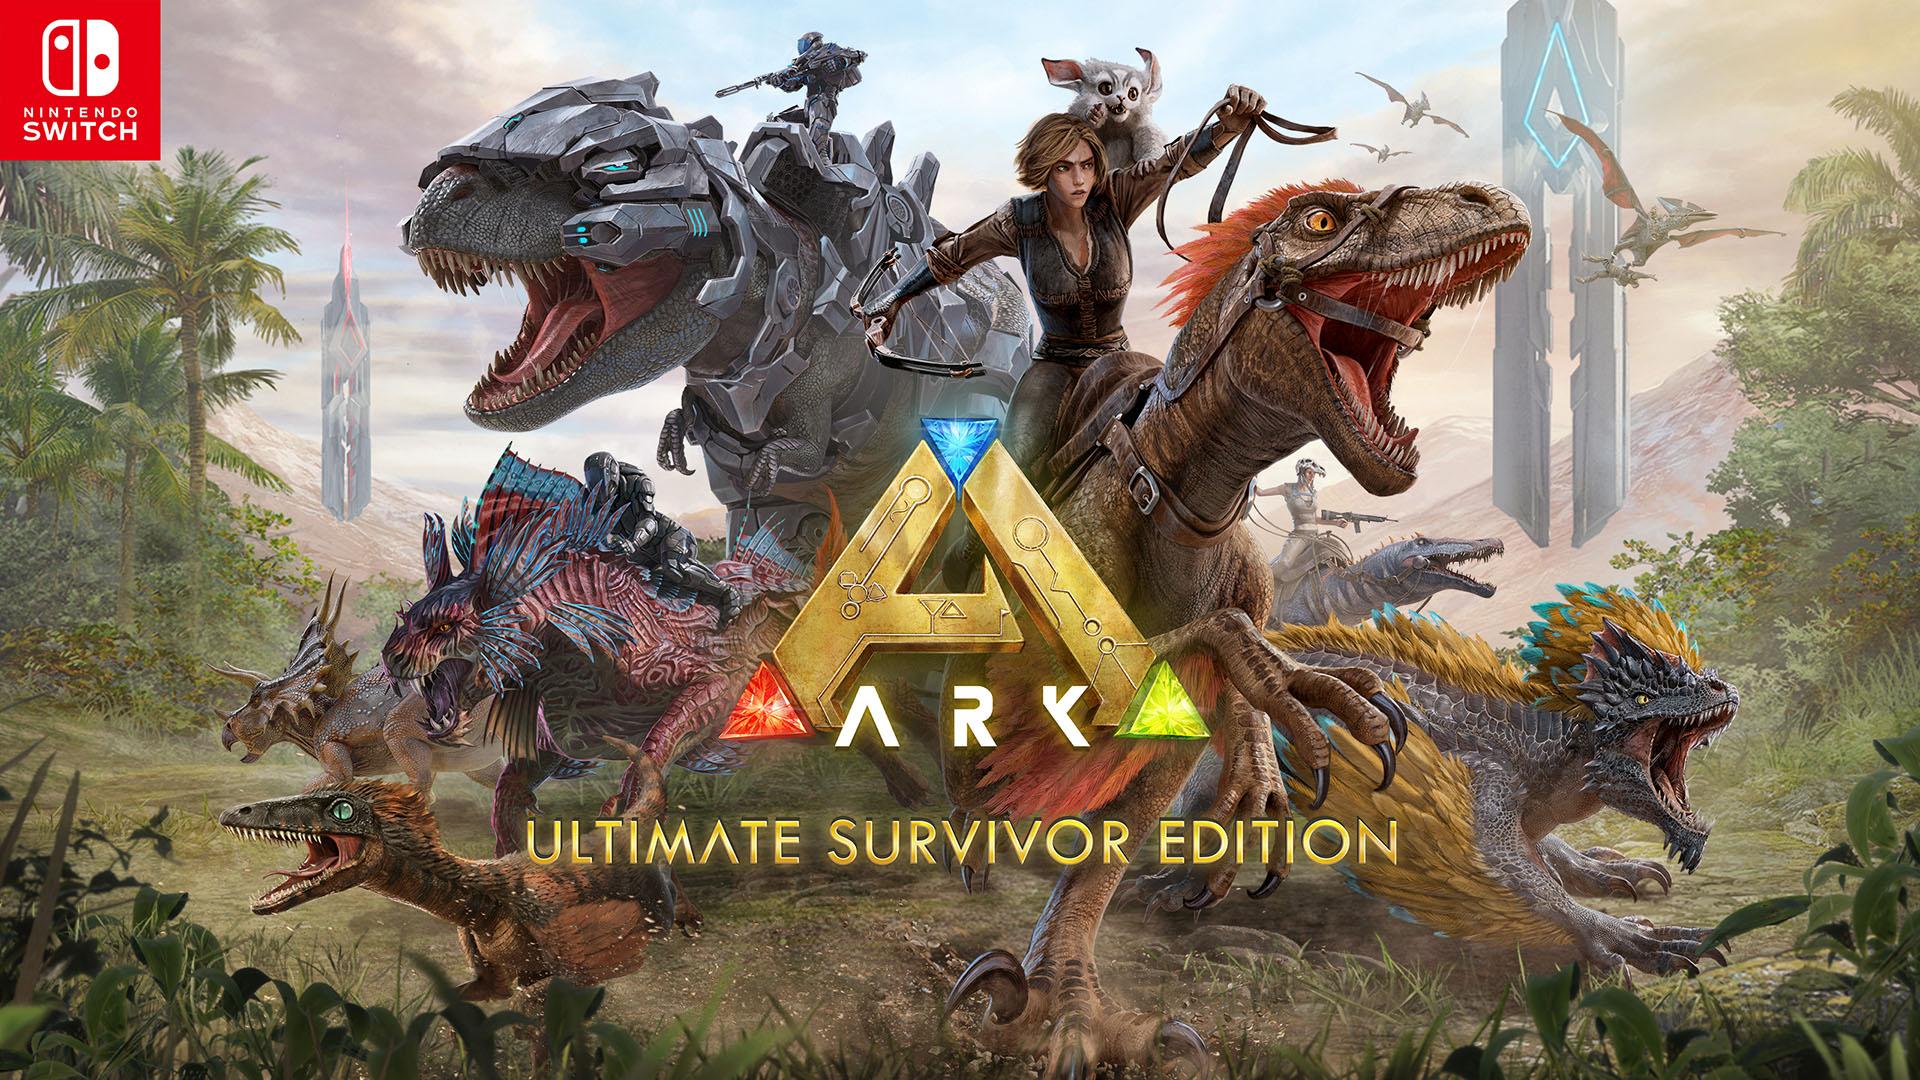 Introducing ARK Ultimate Survivor Edition on Nintendo Switch